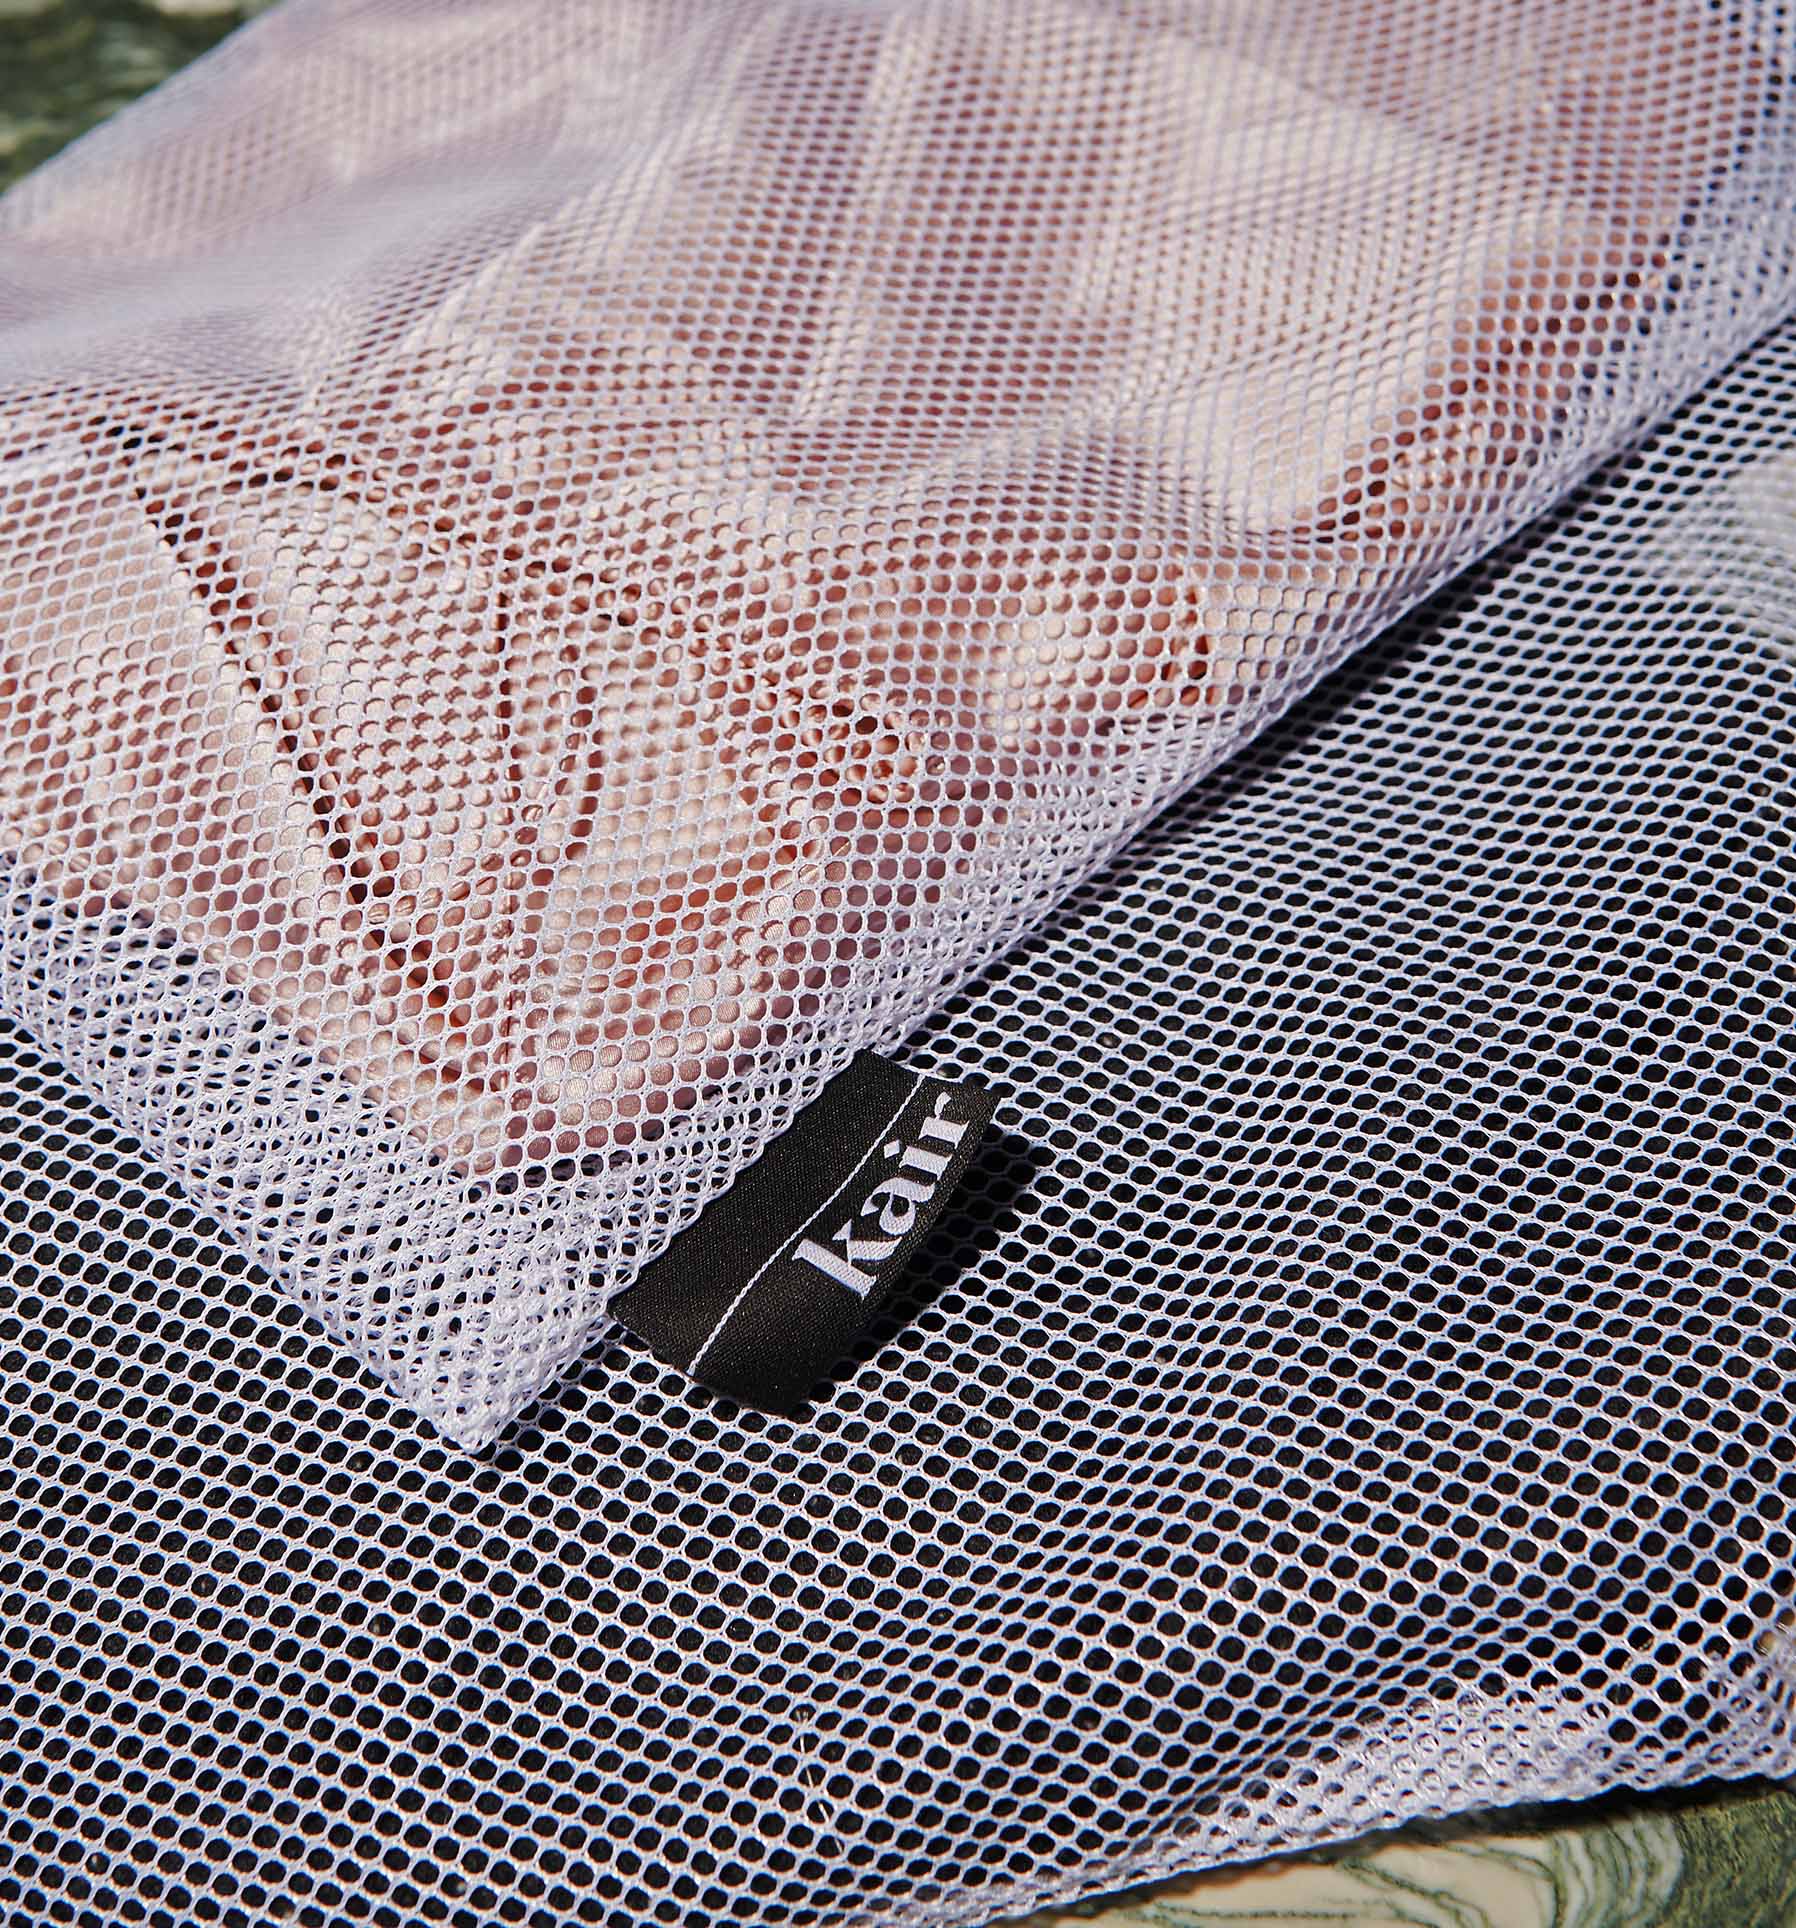 Kair mesh laundry bag containing a pink silk garment